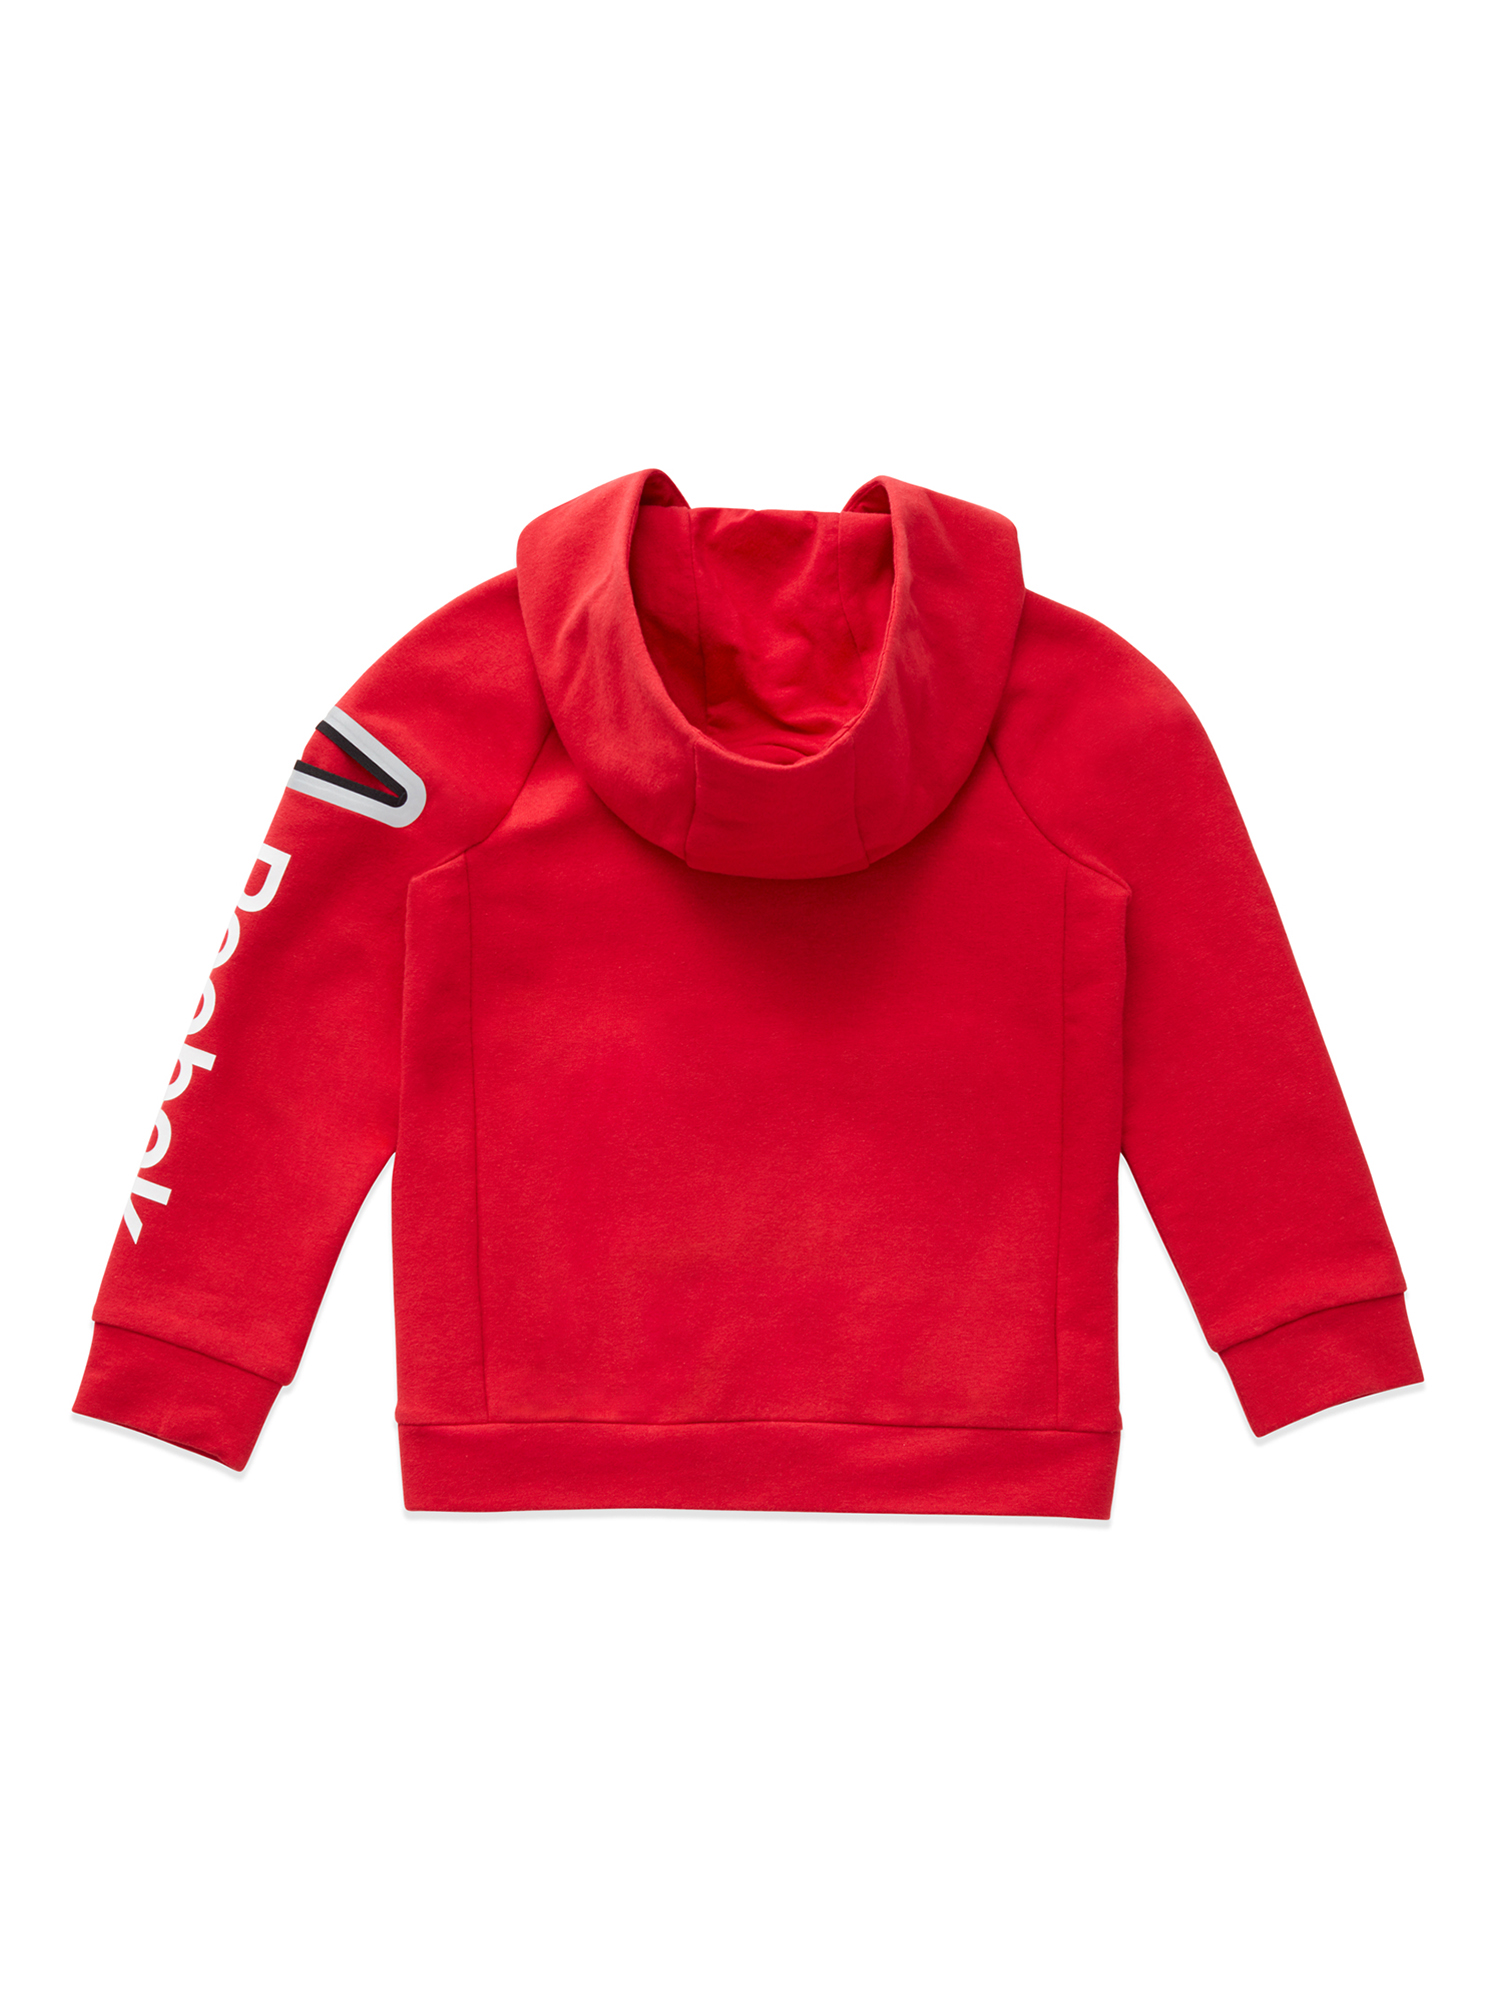 Reebok Long Sleeve Hoodie Pullover Hooded Active Fit Athletic Sweatshirt (Infant or Toddler) 1 Pack - image 2 of 3